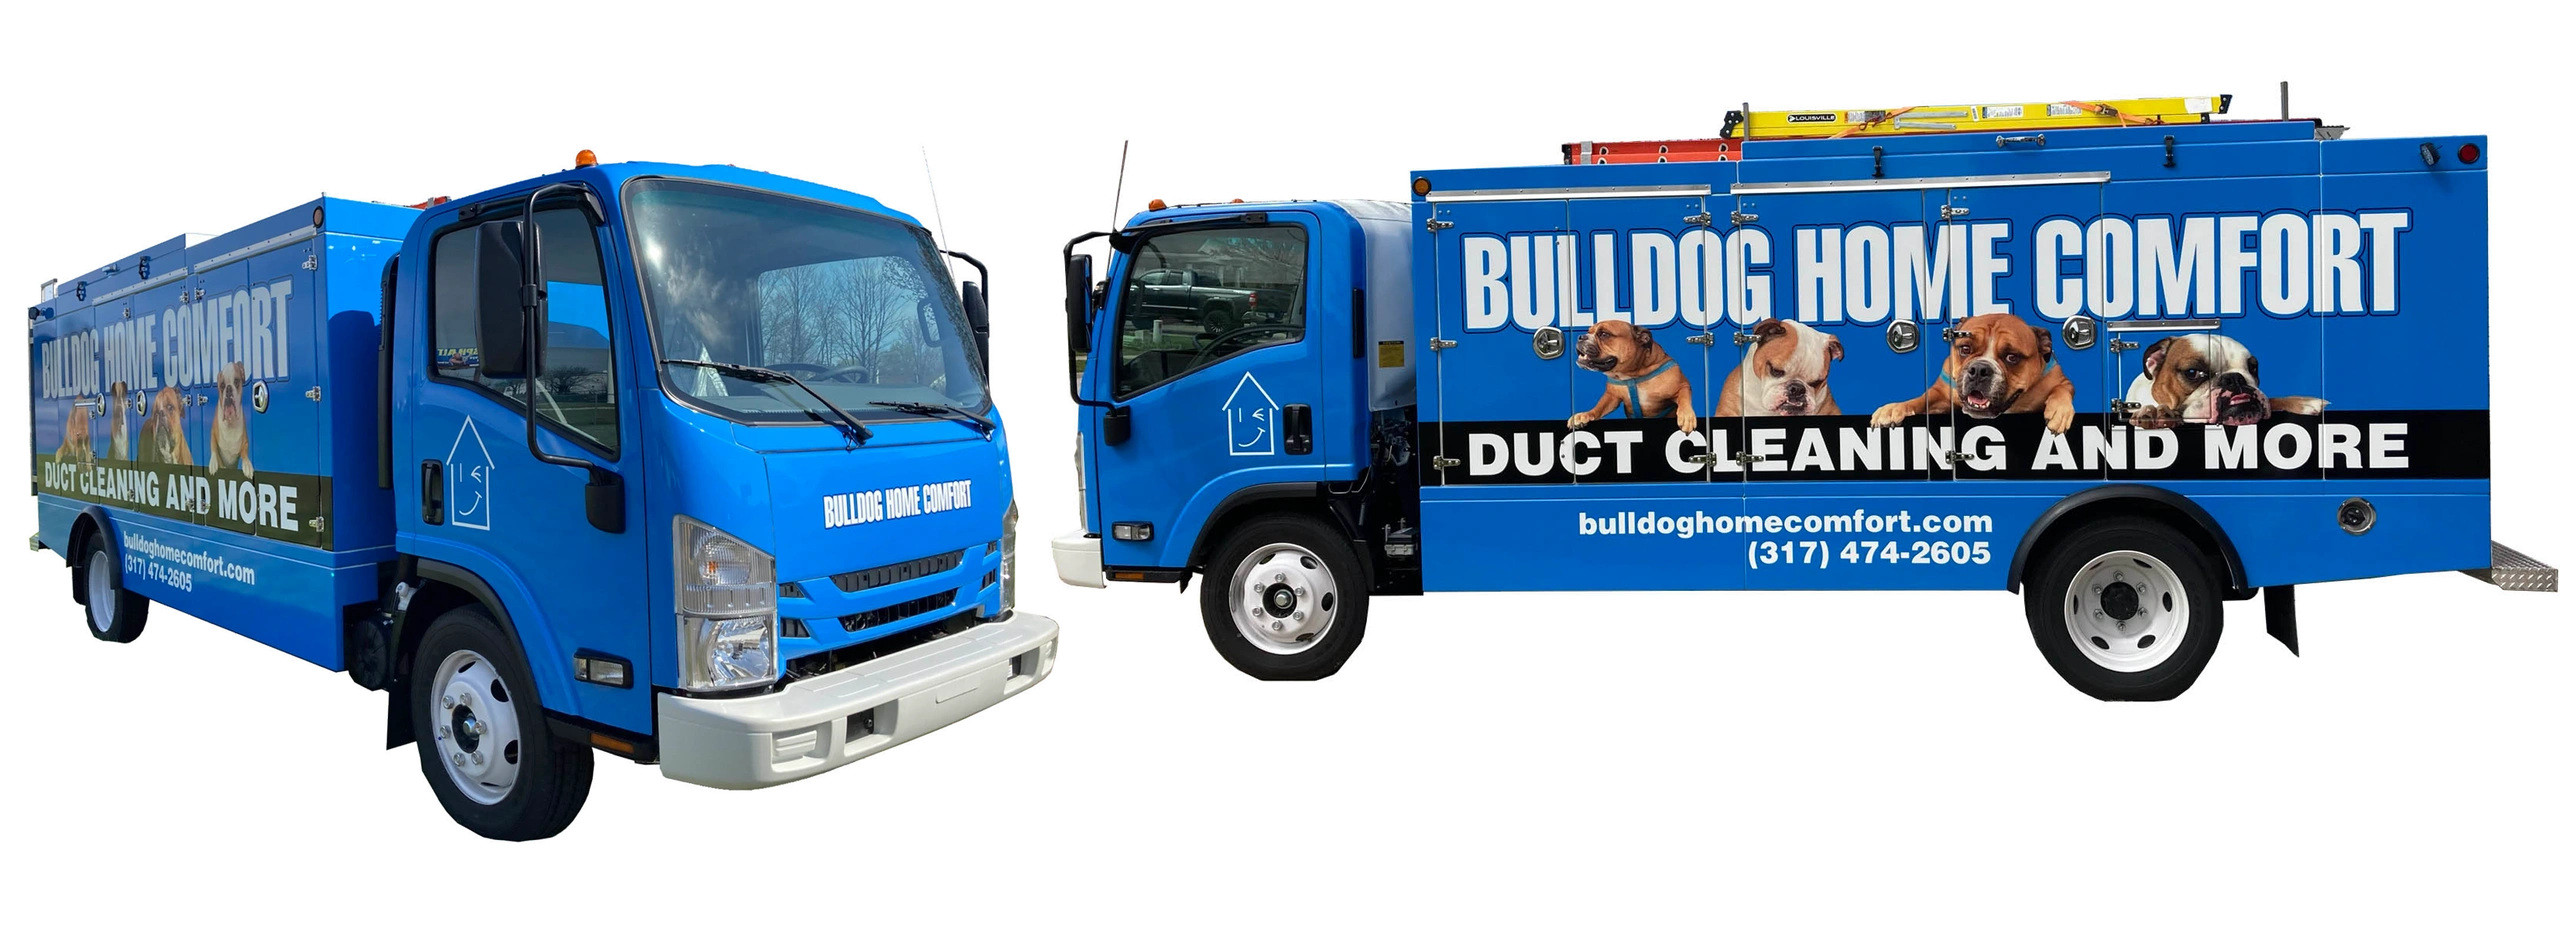 bulldog home comfort duct cleaning trucks